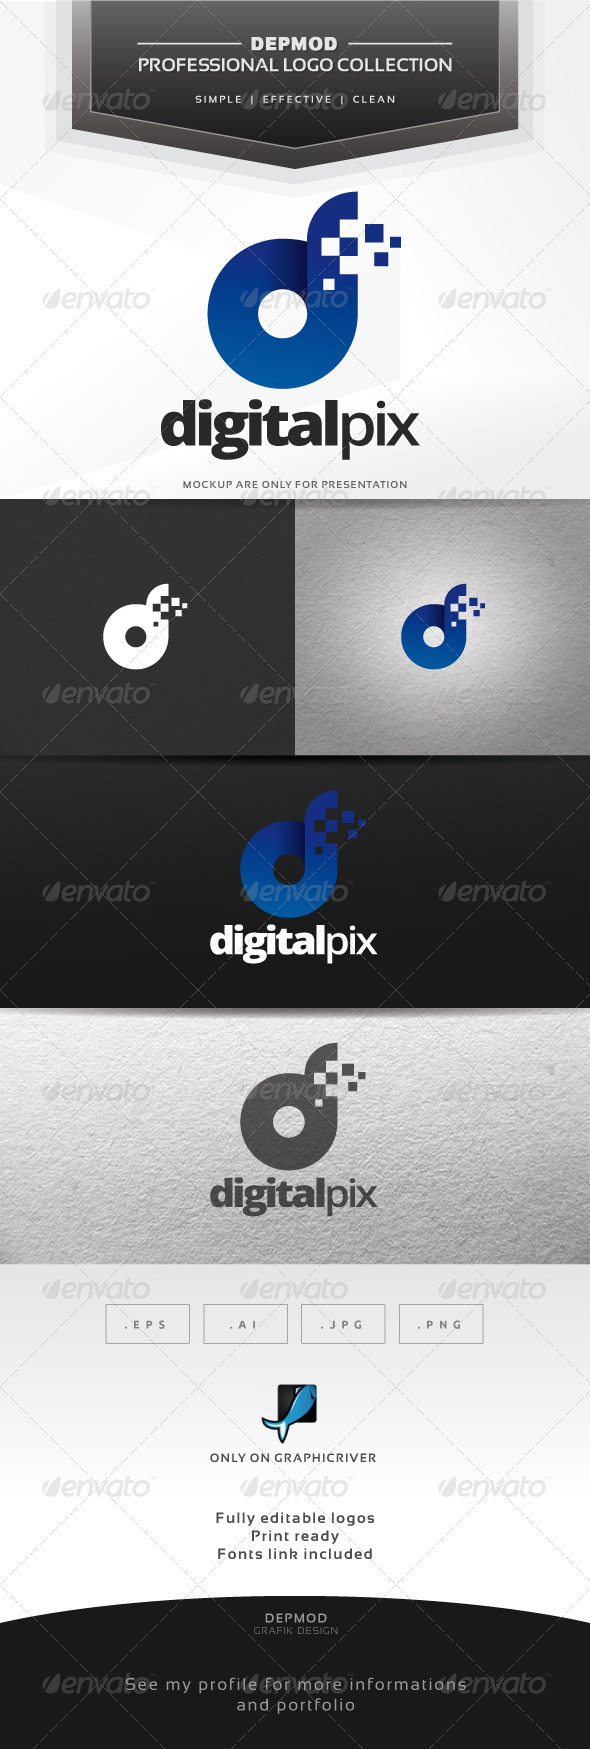 Digital Pix Logo